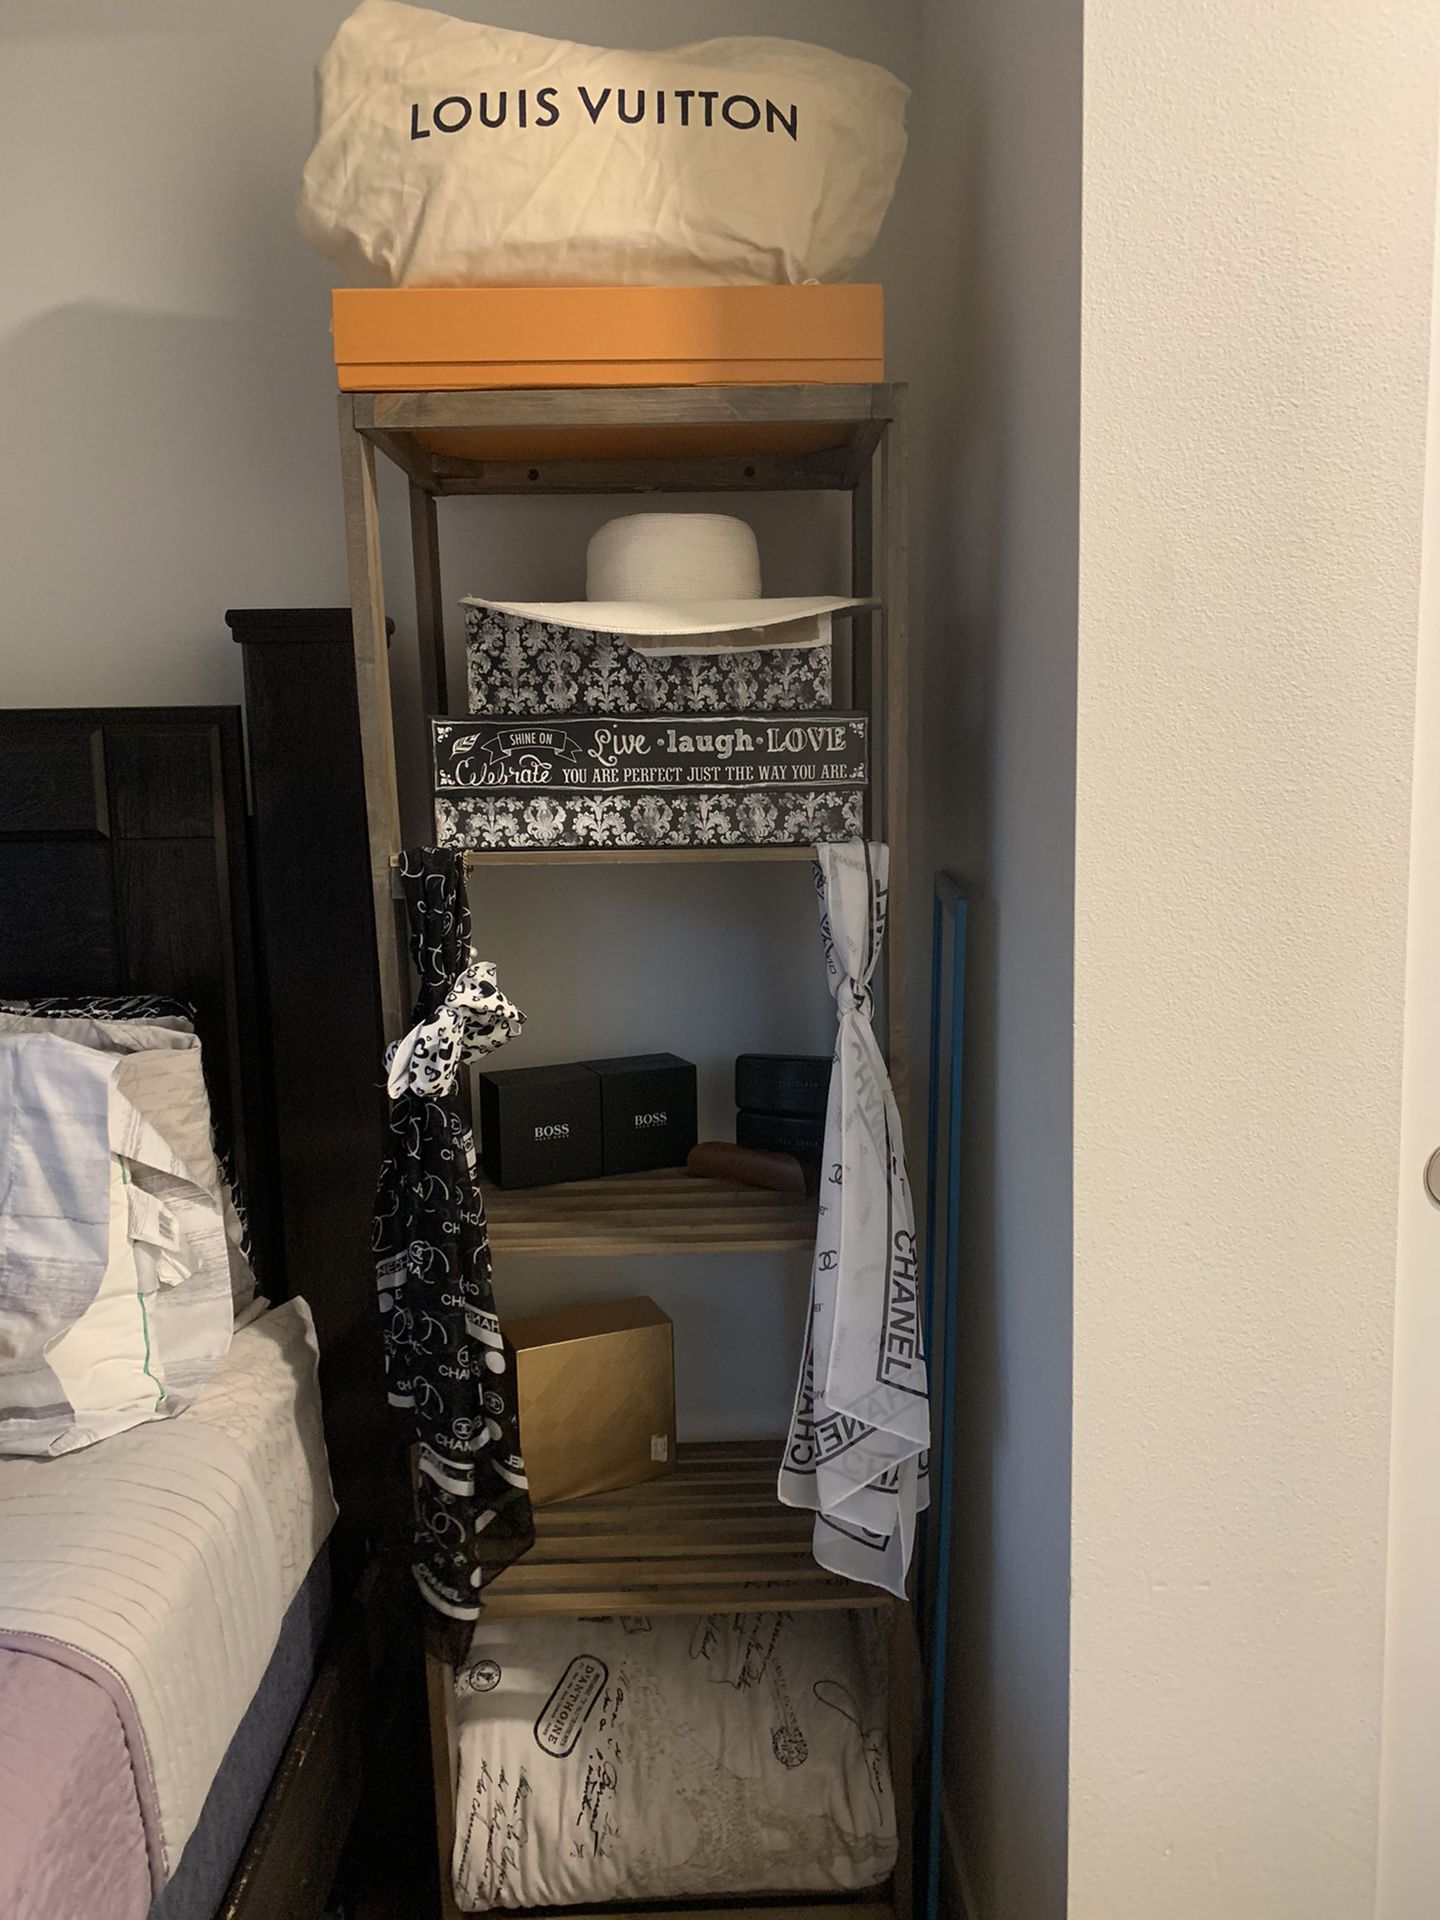 Tall shelve with matching organizer/book shelves